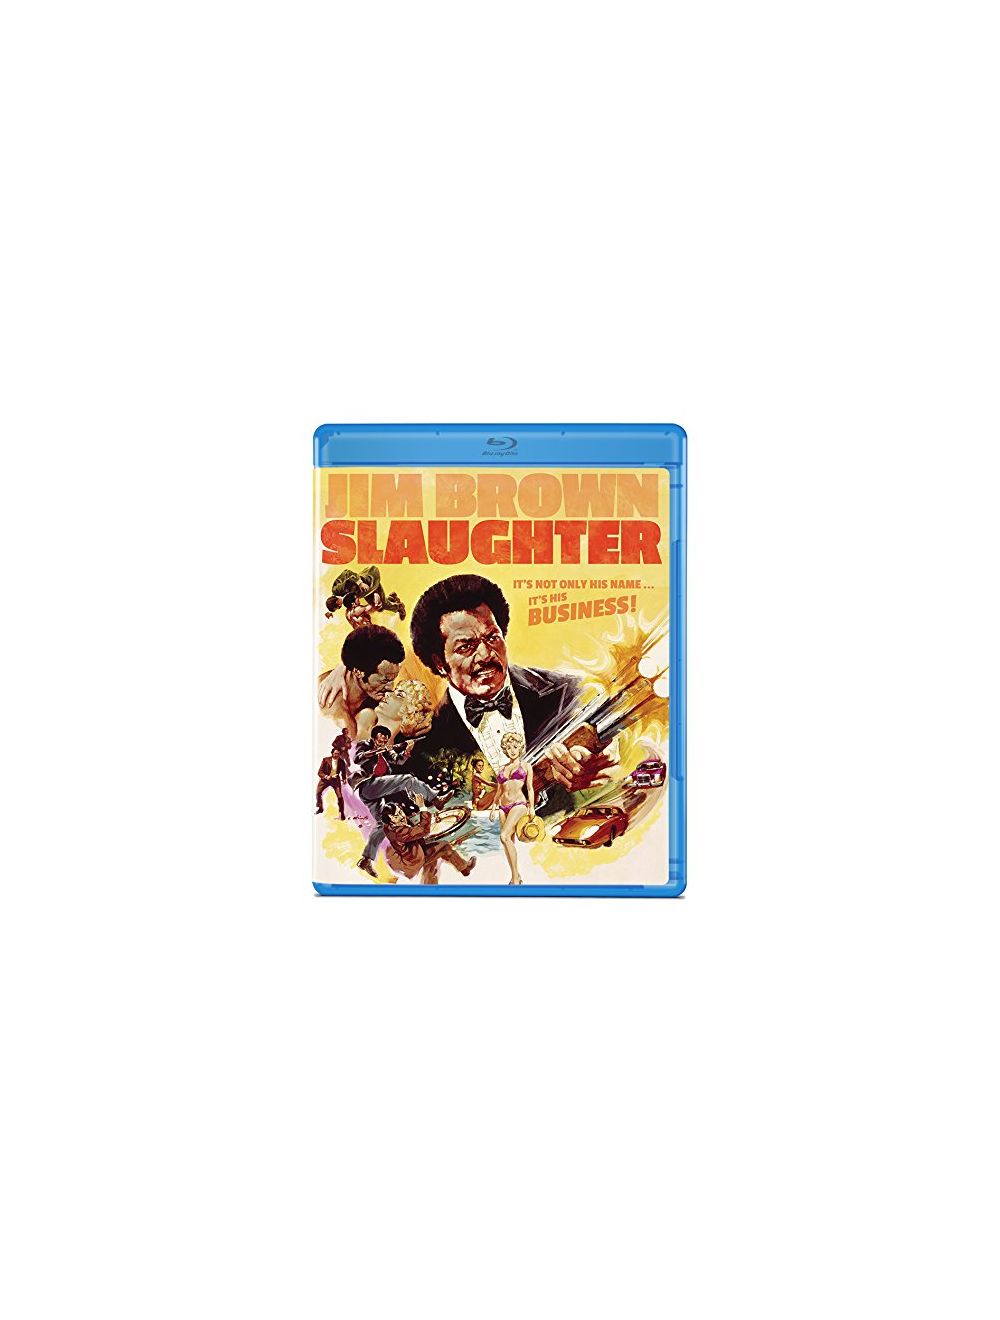  Slaughter : Jim Brown, Stella Stevens, Rip Torn